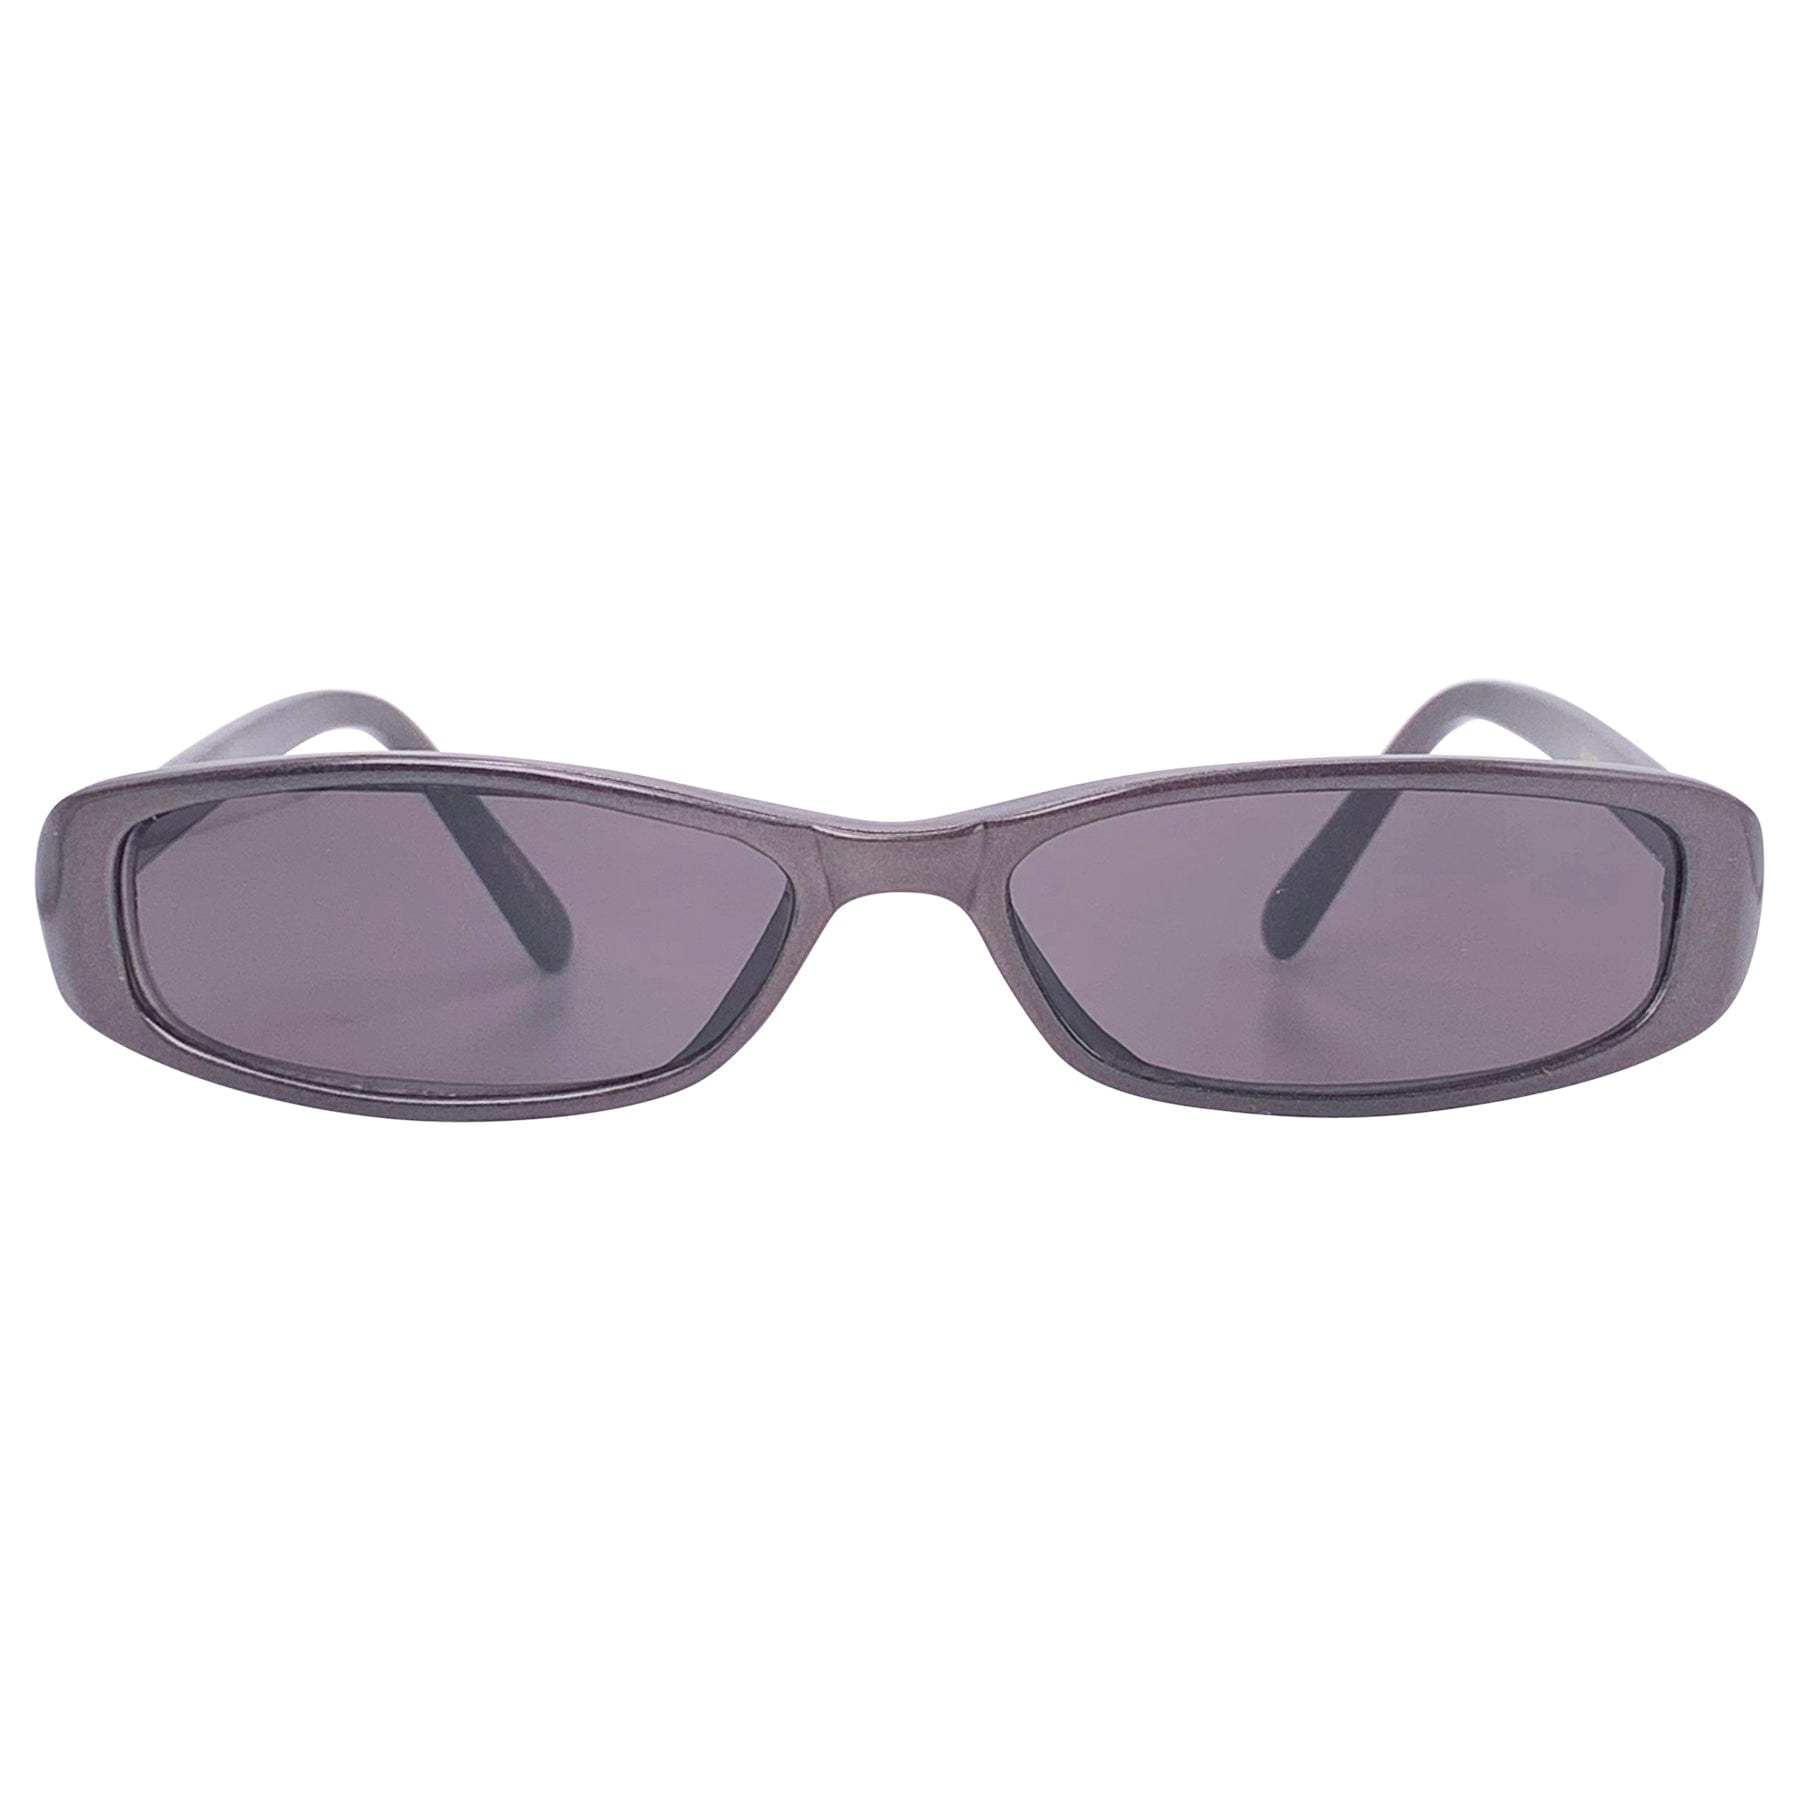 90s mens retro sunglasses with a small gray colored frame